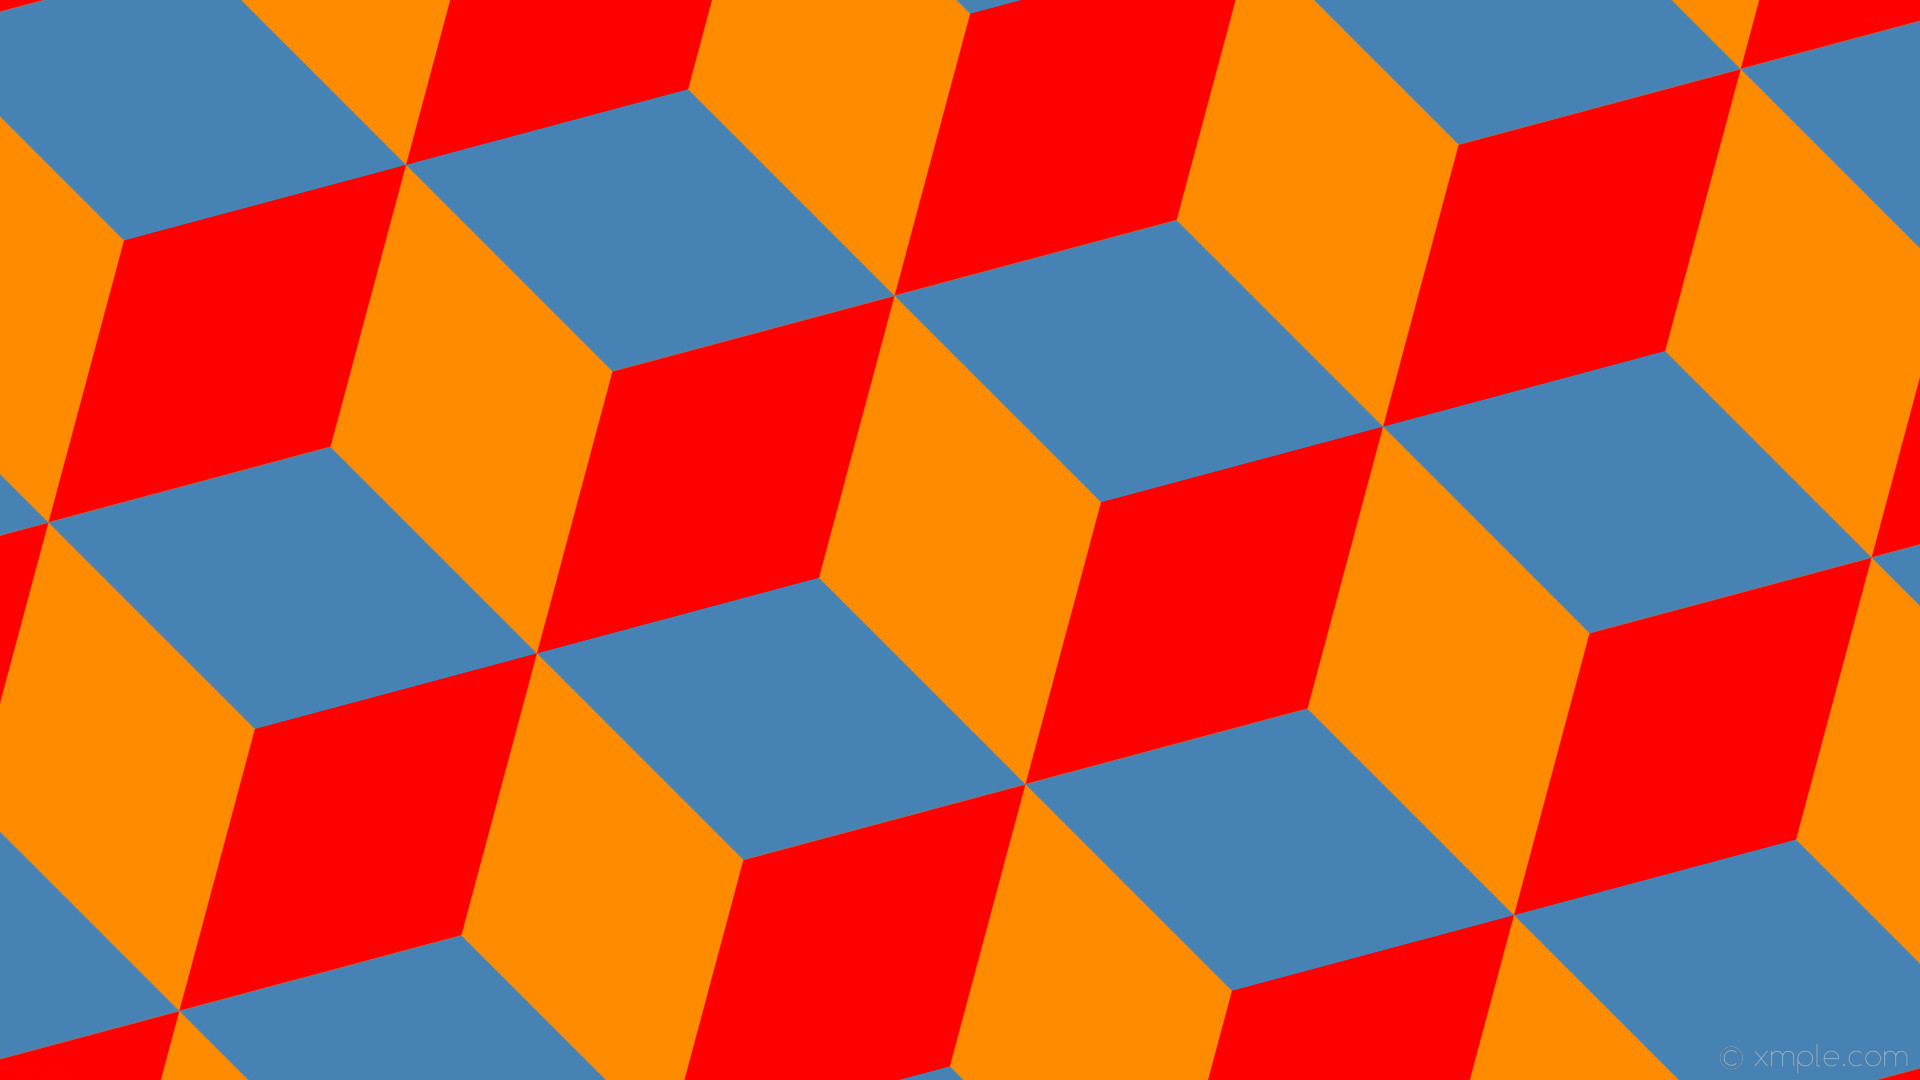 1920x1080 wallpaper 3d cubes red orange blue dark orange steel blue #ff8c00 #ff0000  #4682b4